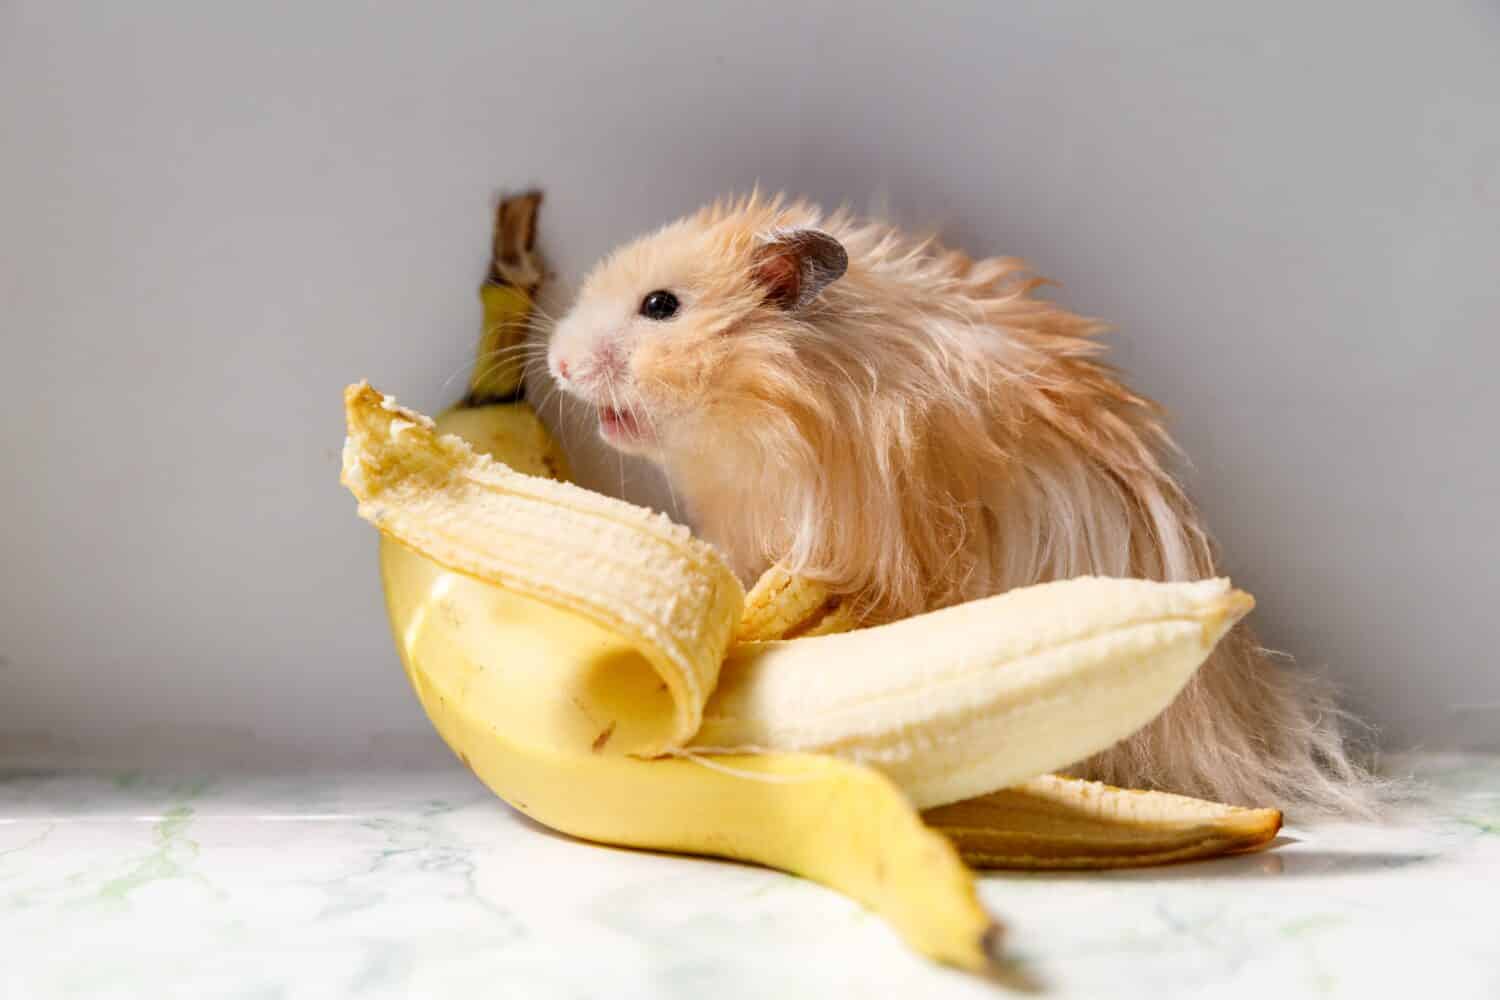 Benefits of Feeding Bananas to Hamsters